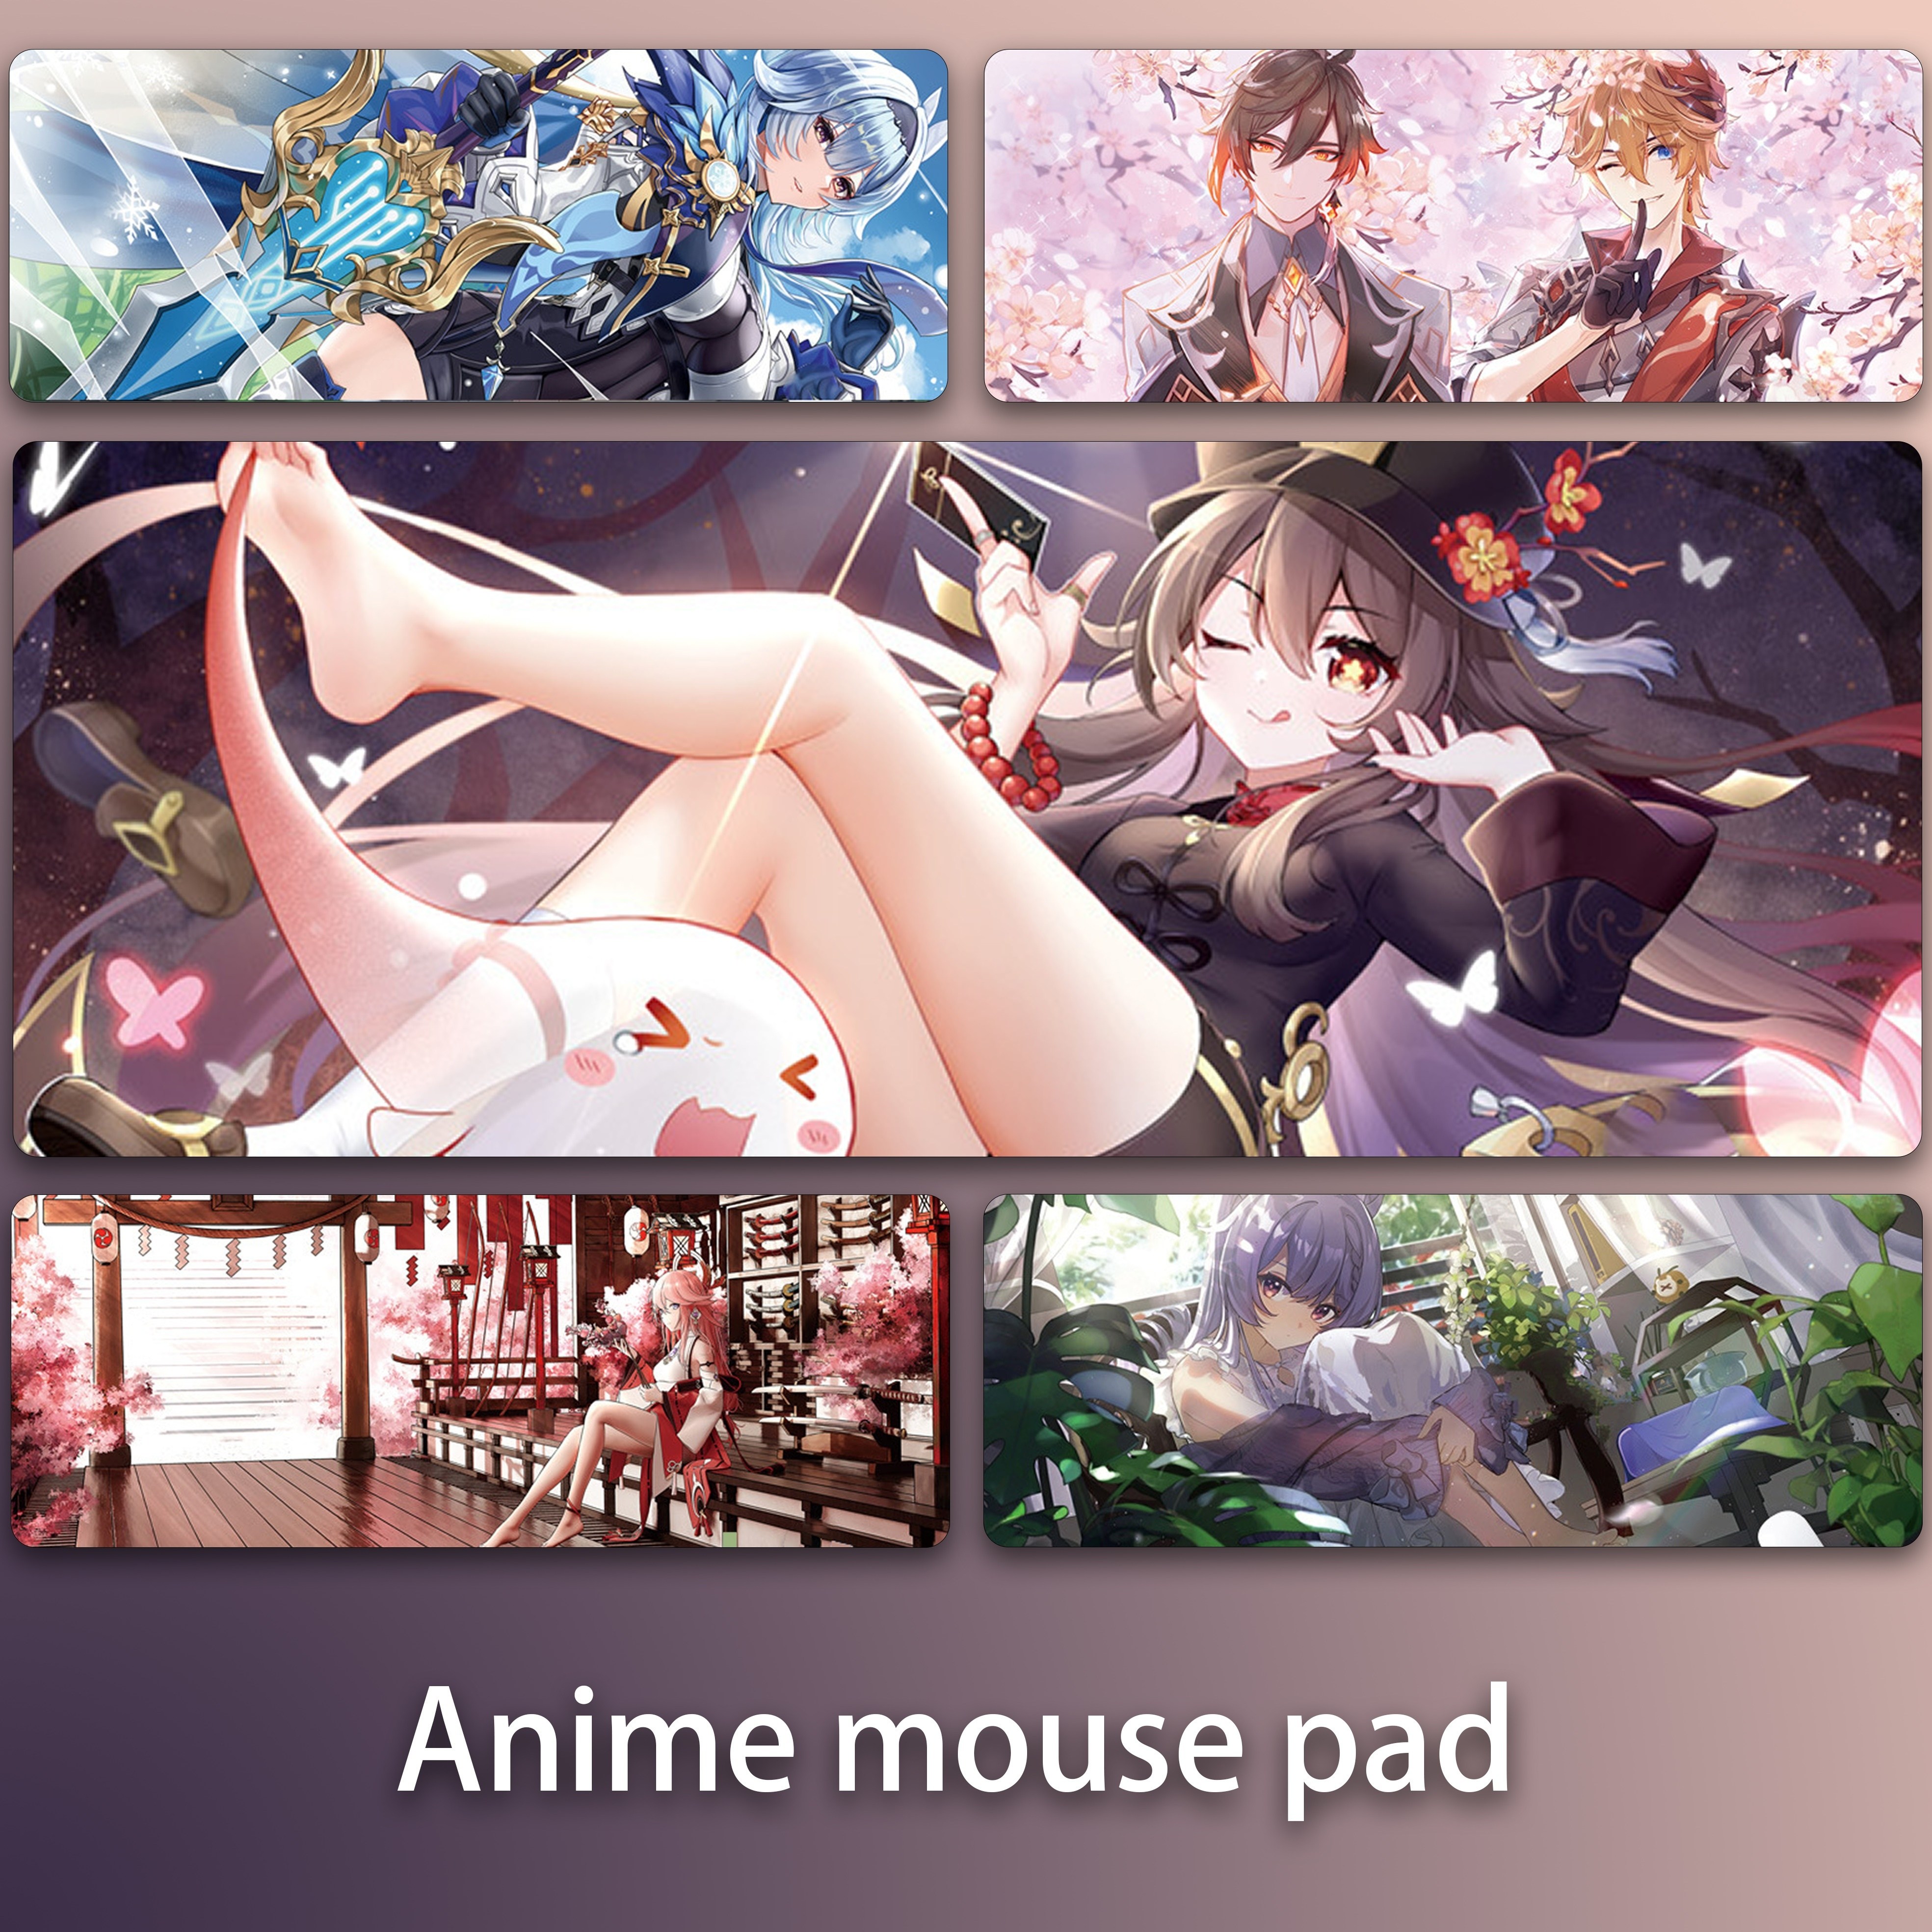 Oshi No Ko Aqua and Ruby Hoshini Anime Mouse Pad Desk Mat